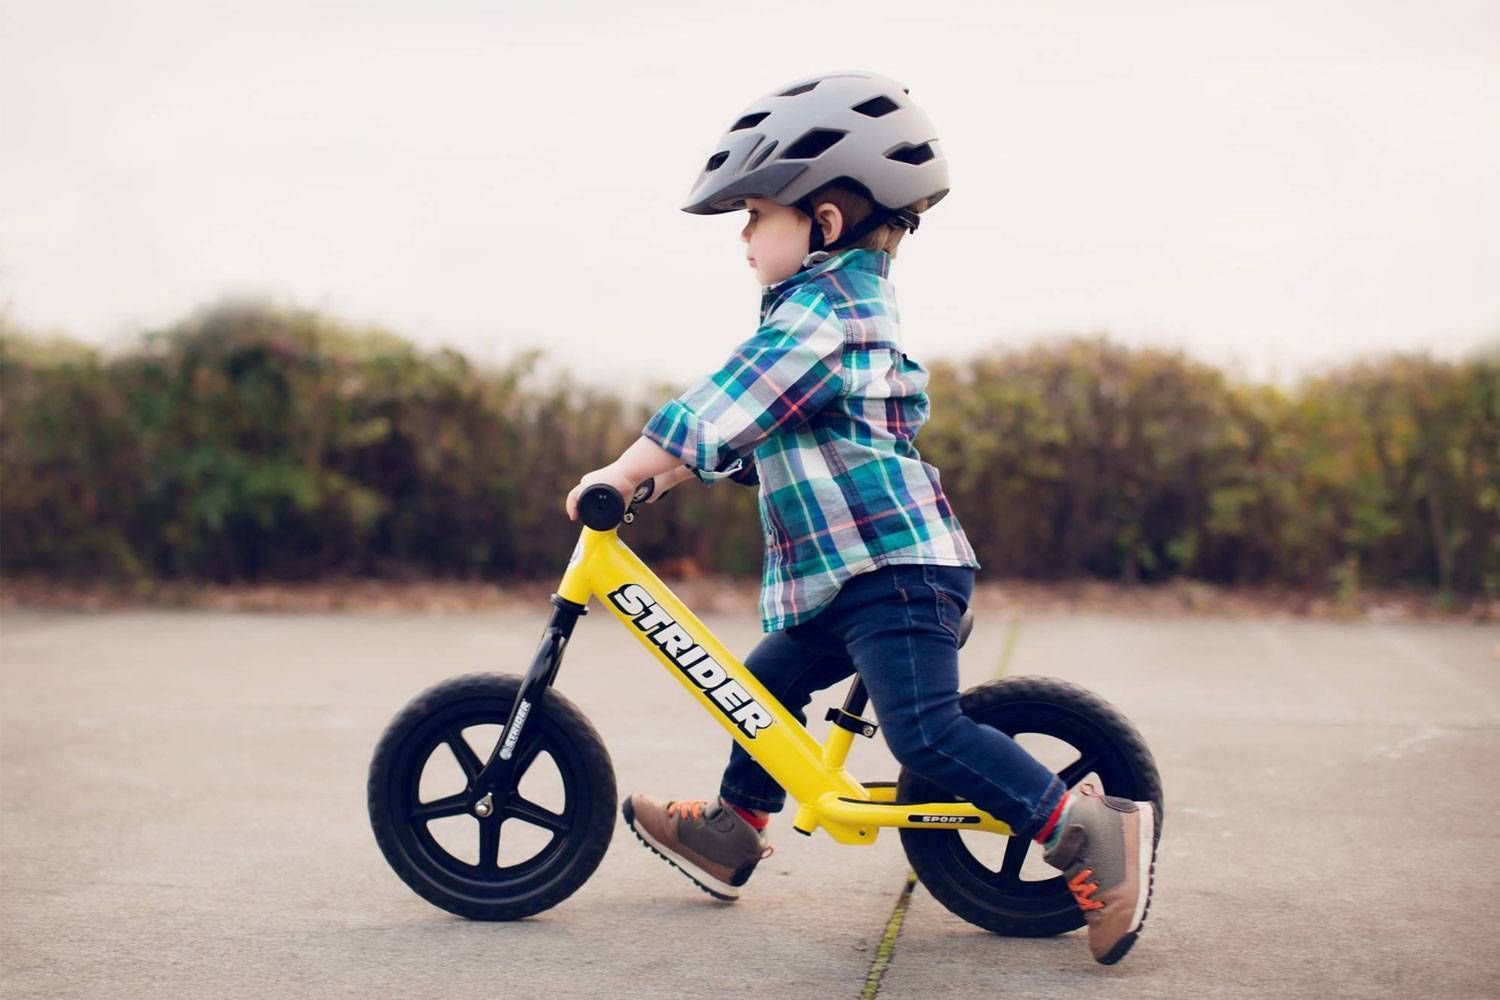 A boy rides a yellow Strider balance bike